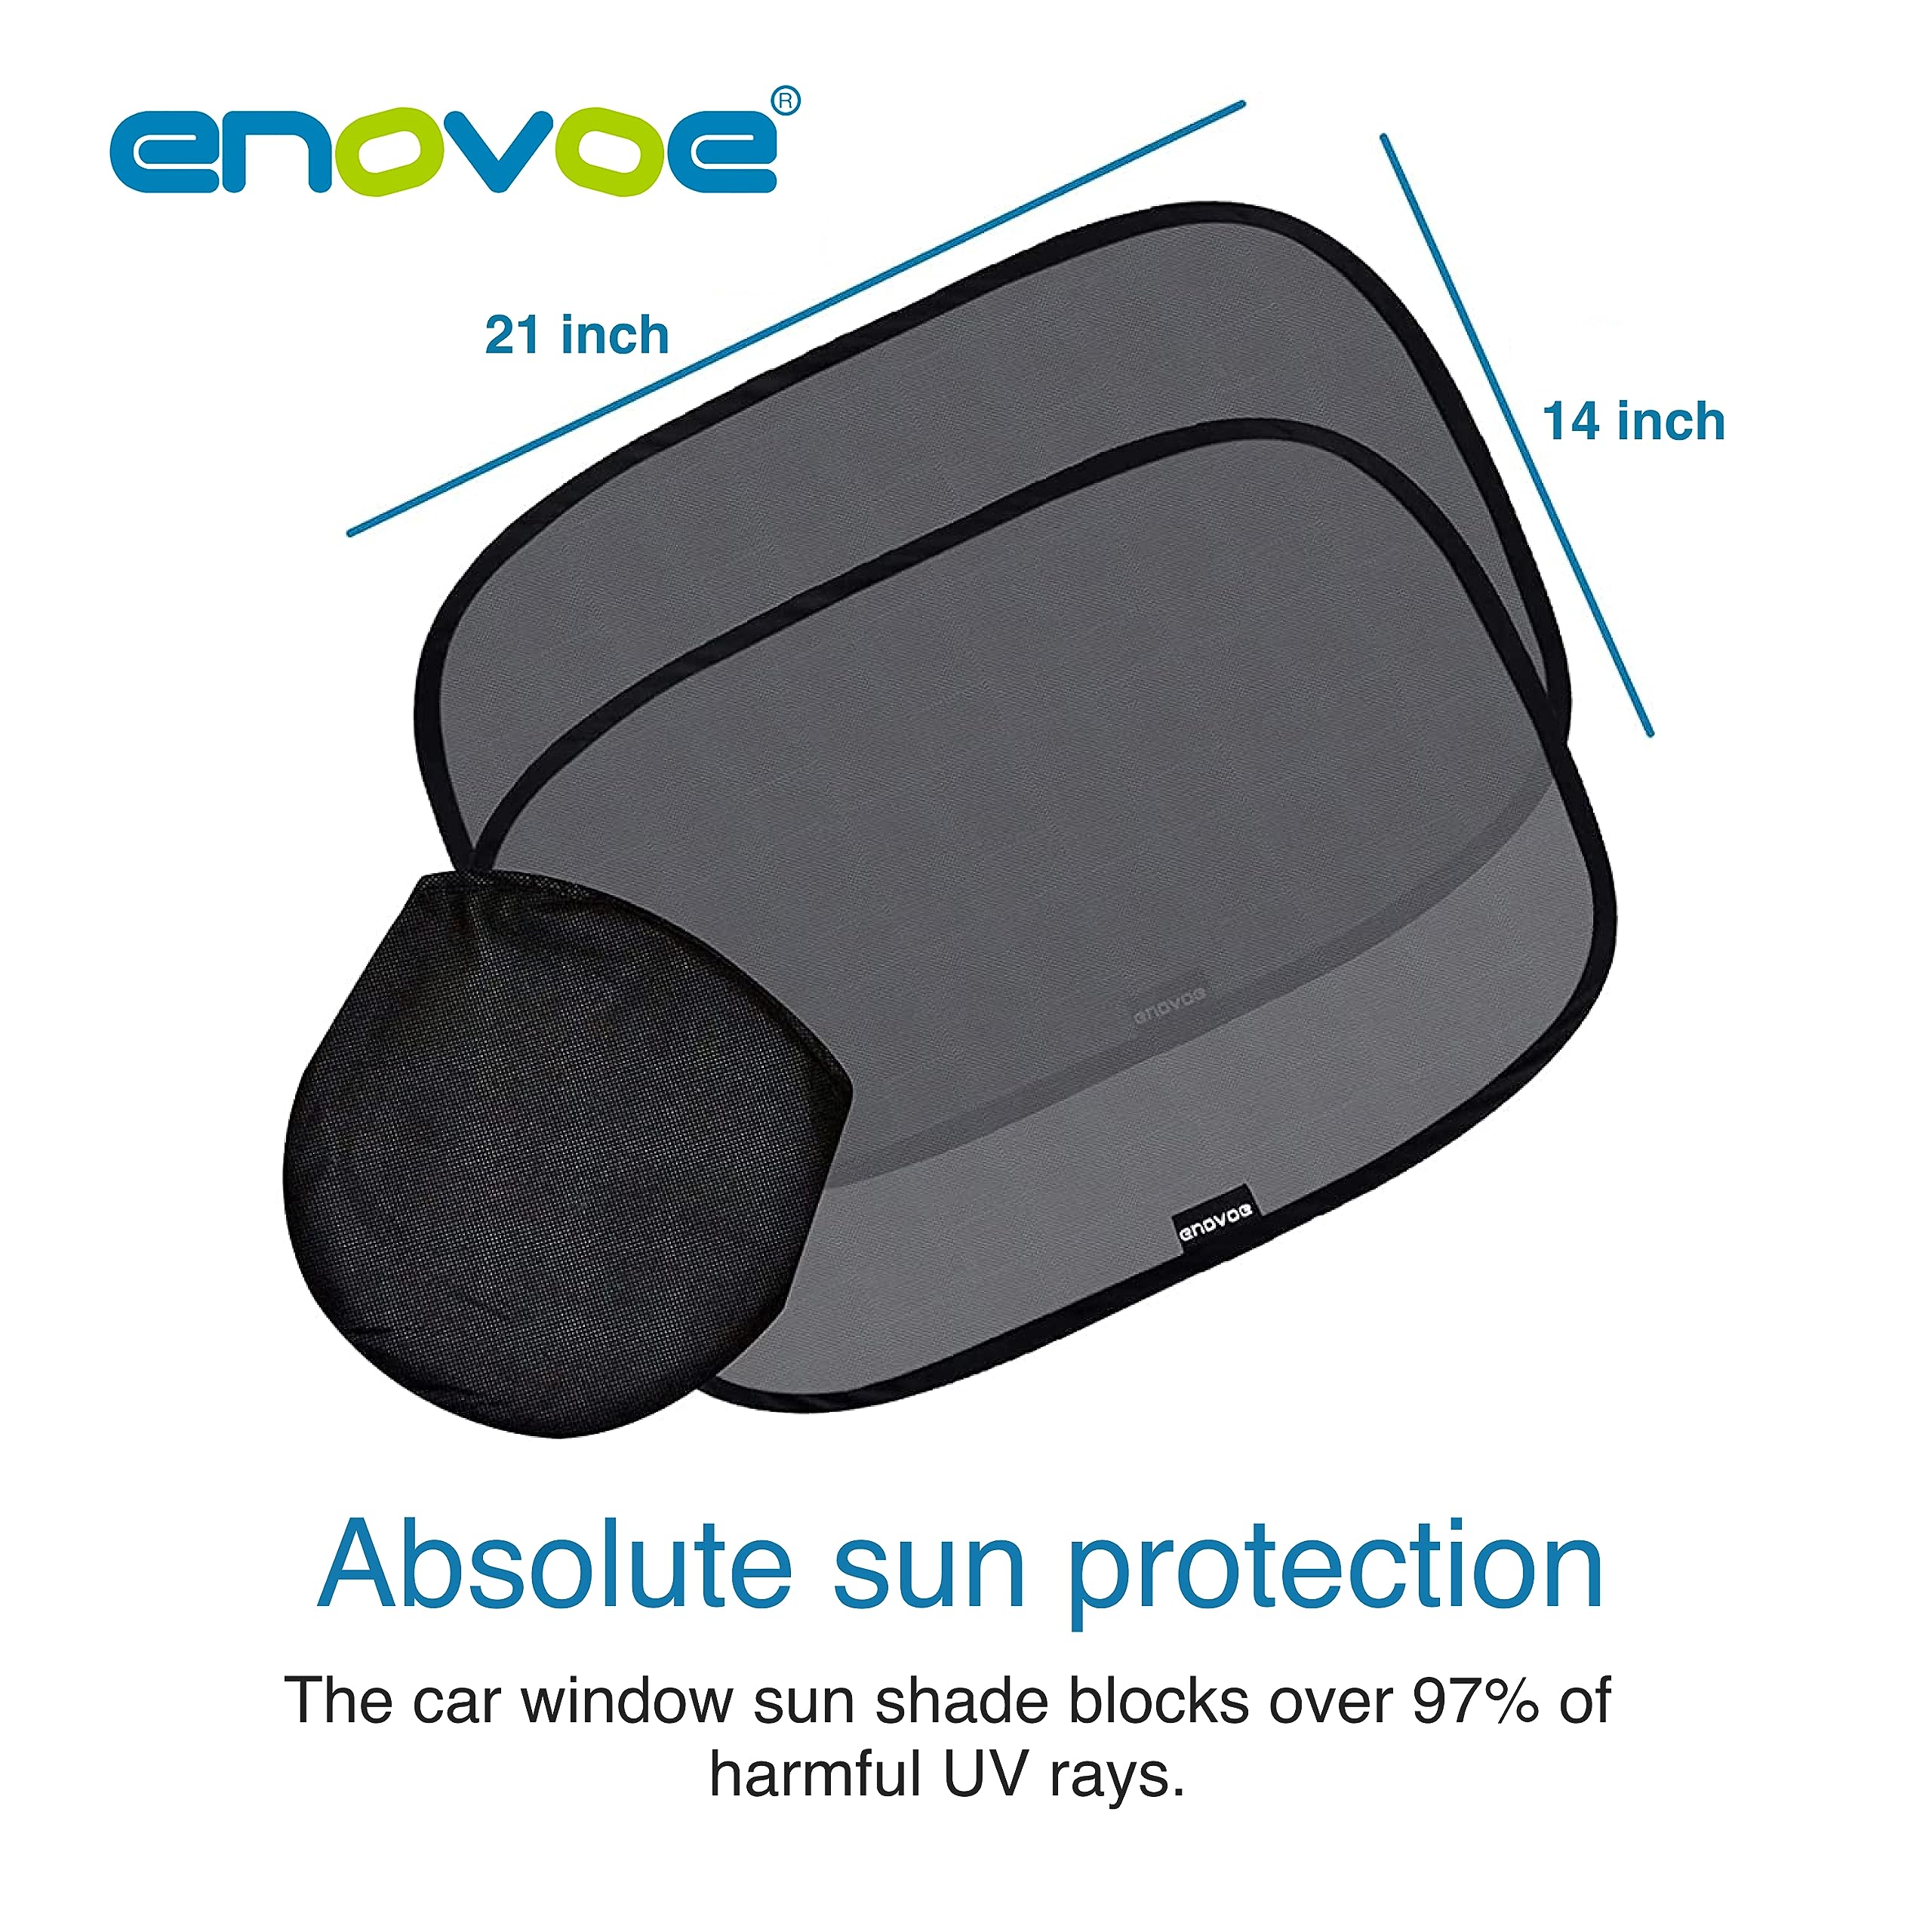 Enovoe Car Window Shades for Baby (21